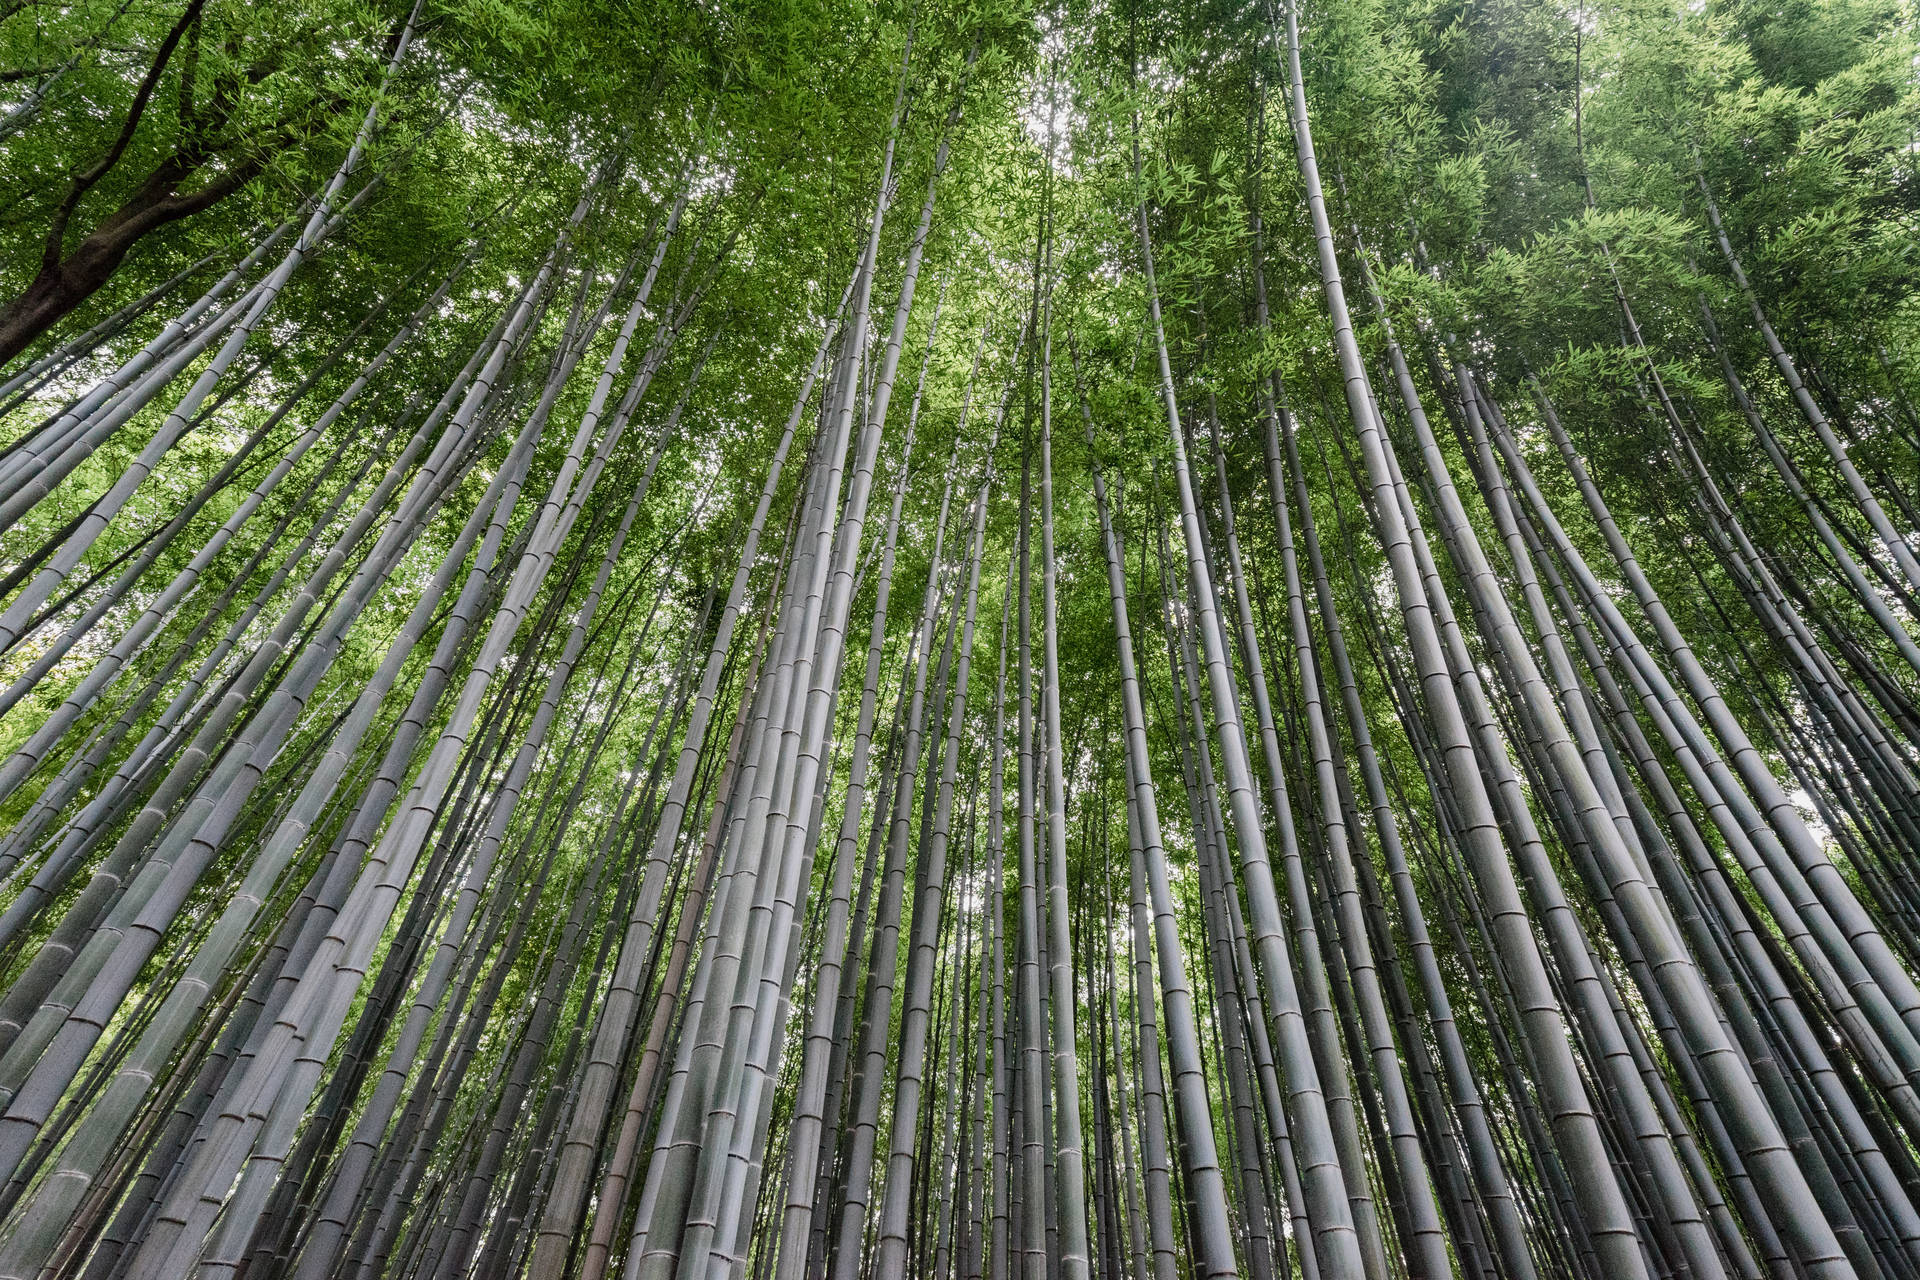 Tall Bamboo Plants